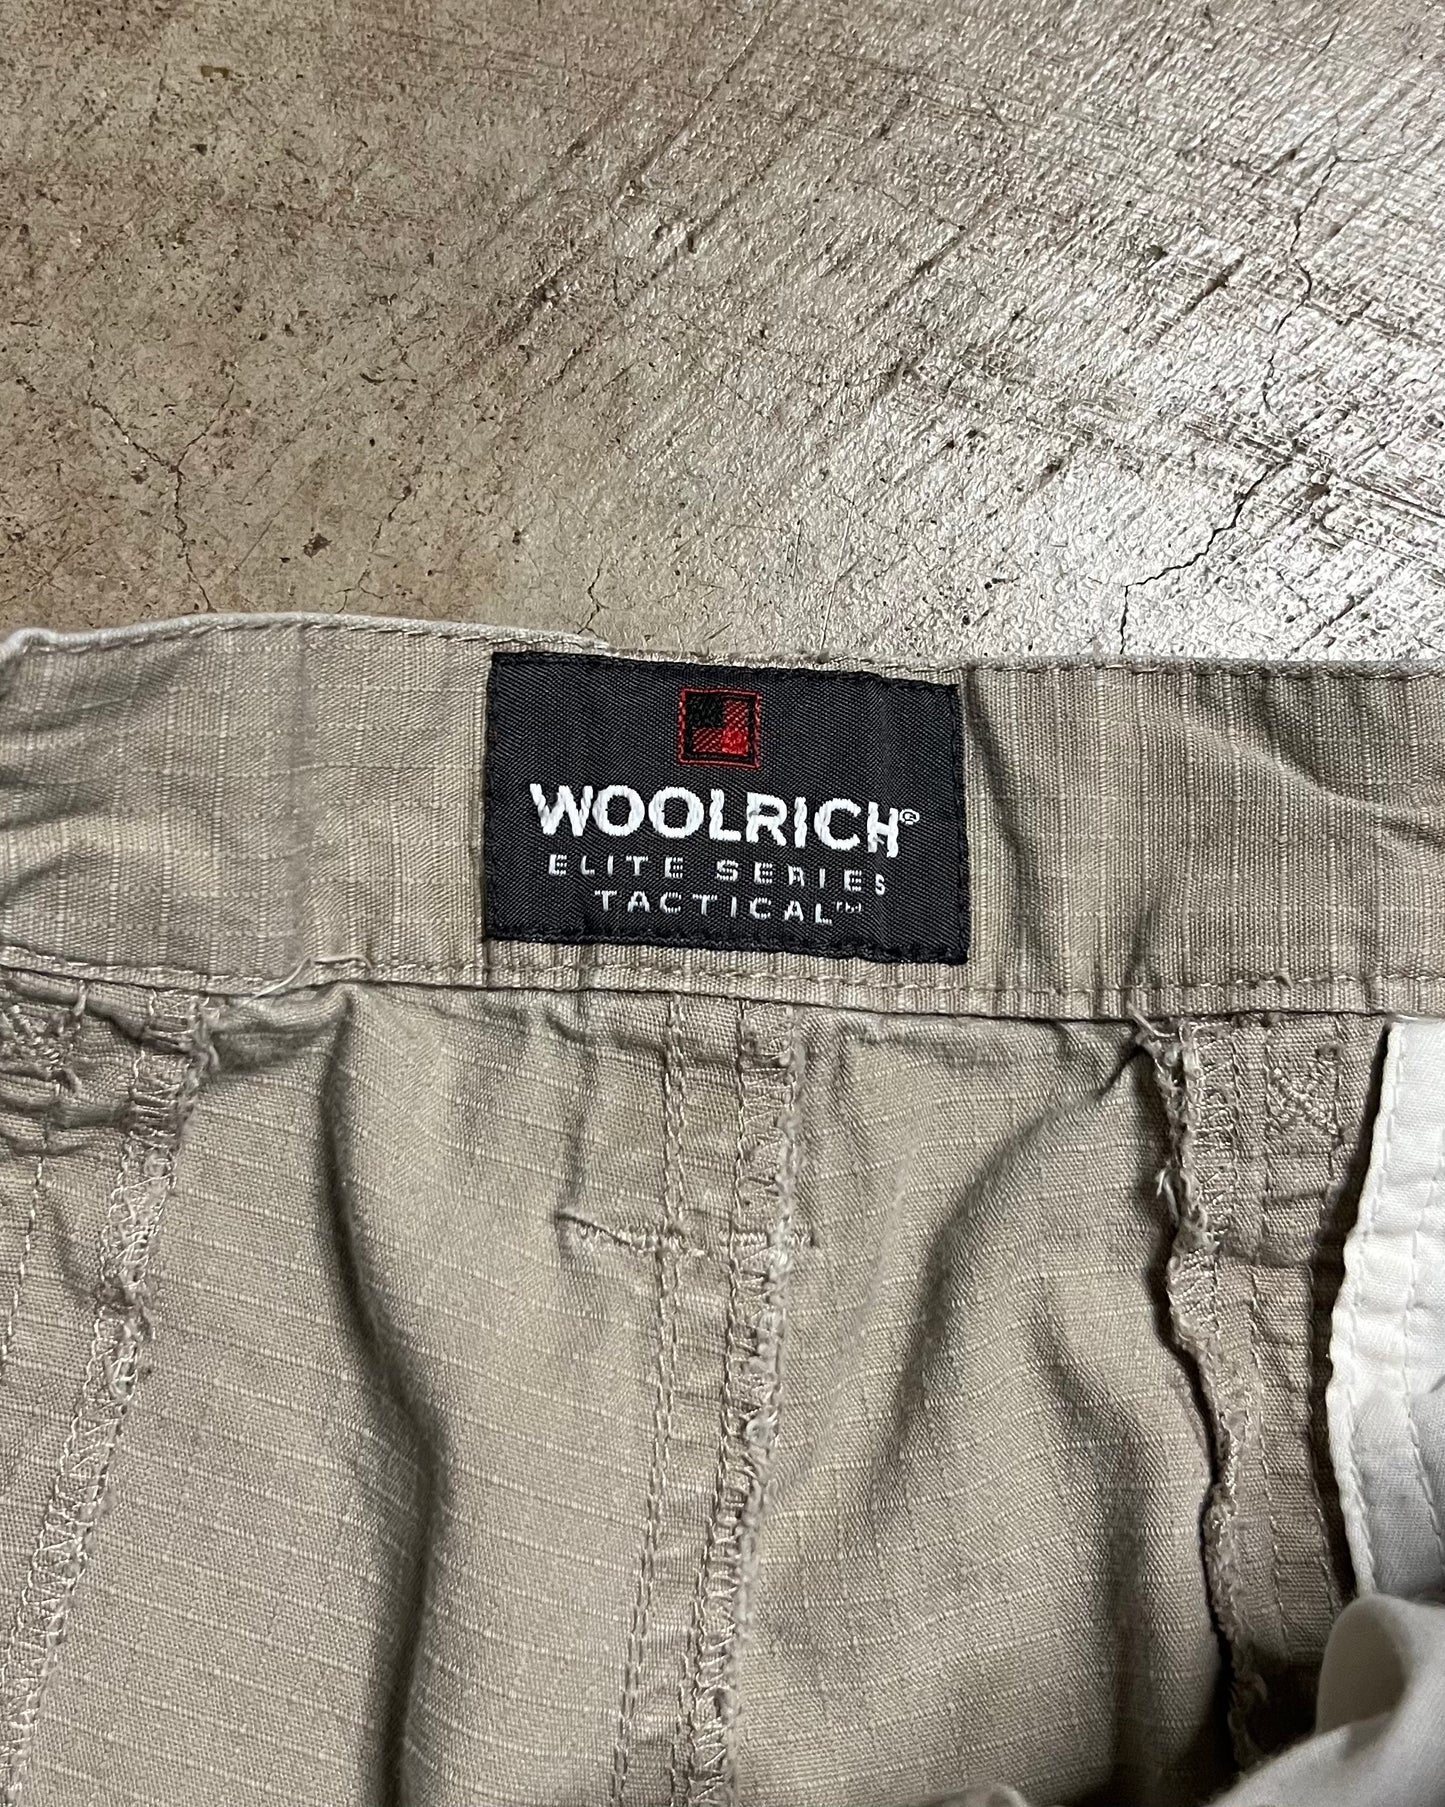 Woolrich Elite Series Tactical Baggy Double Knee Pants